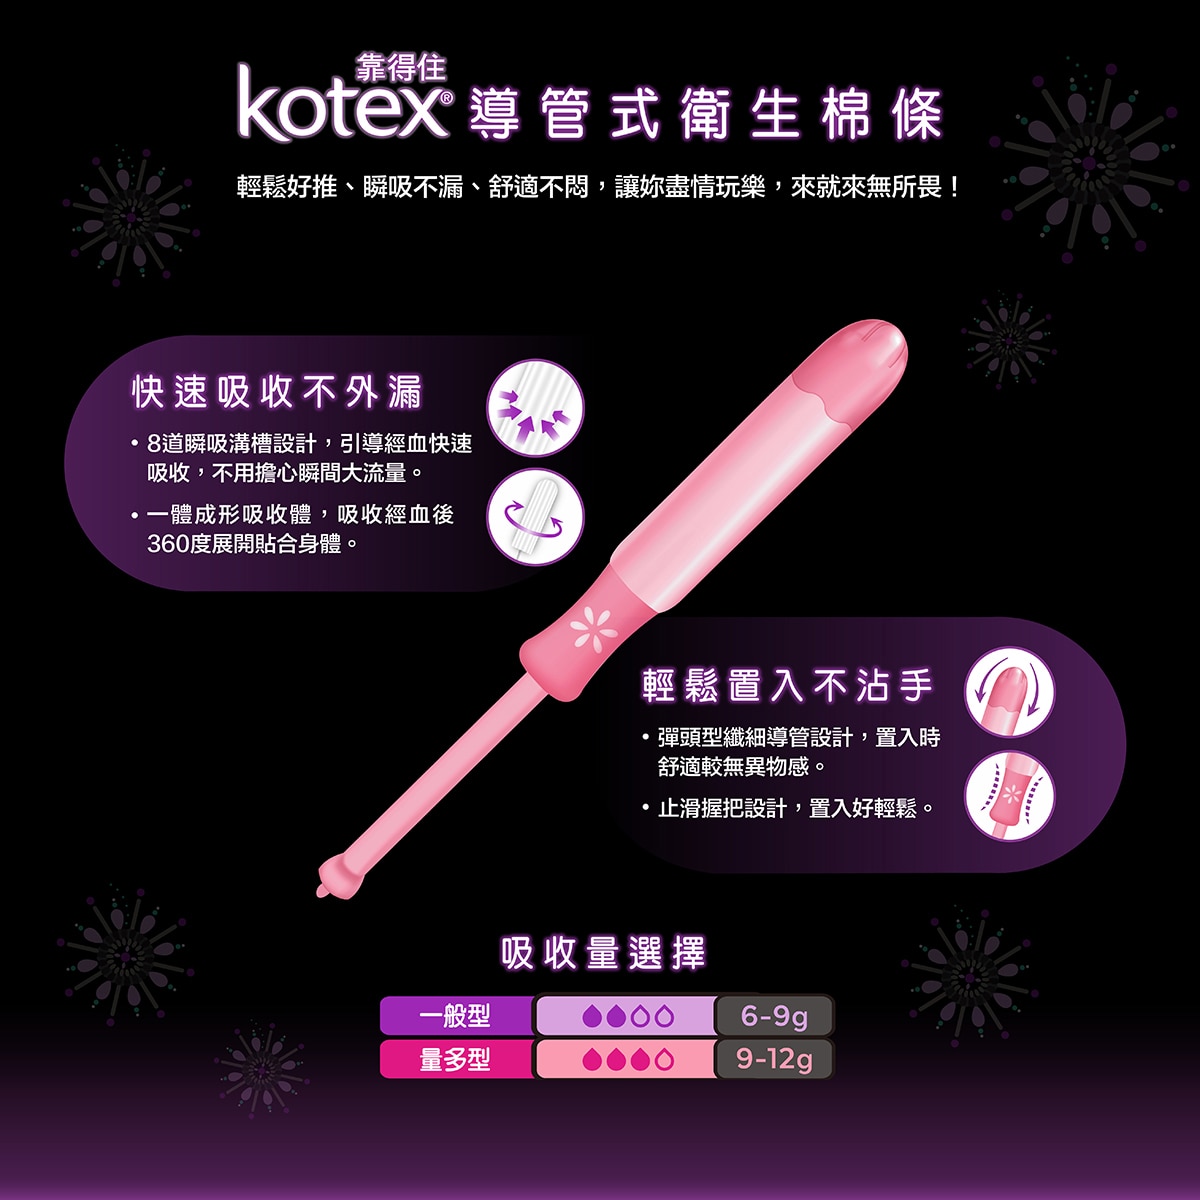 Kotex 導管式衛生棉條 量多型,快速吸收不外露,輕鬆置入不沾手,吸收量選擇。